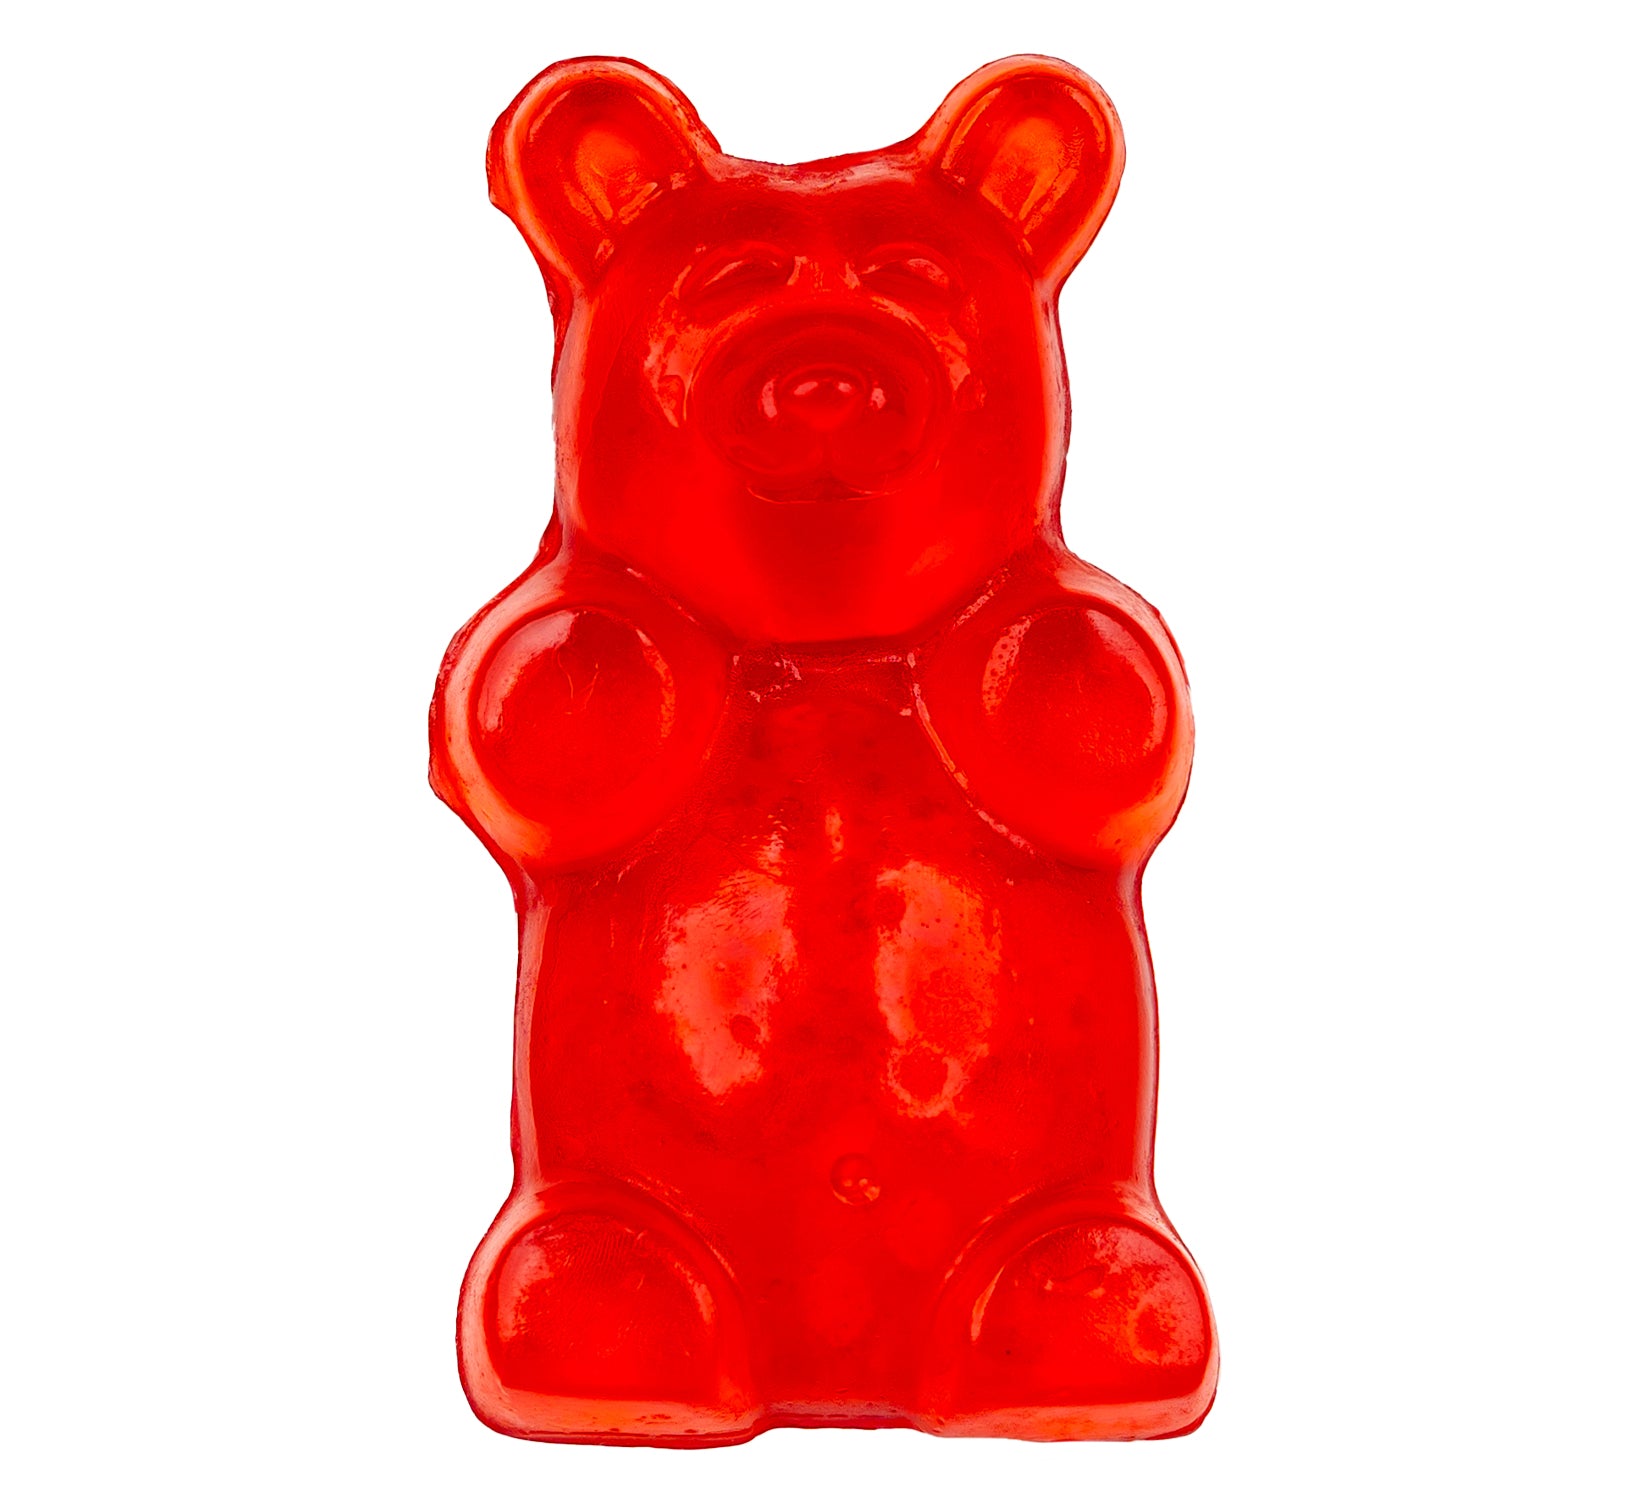 Is giant gummy bear halal